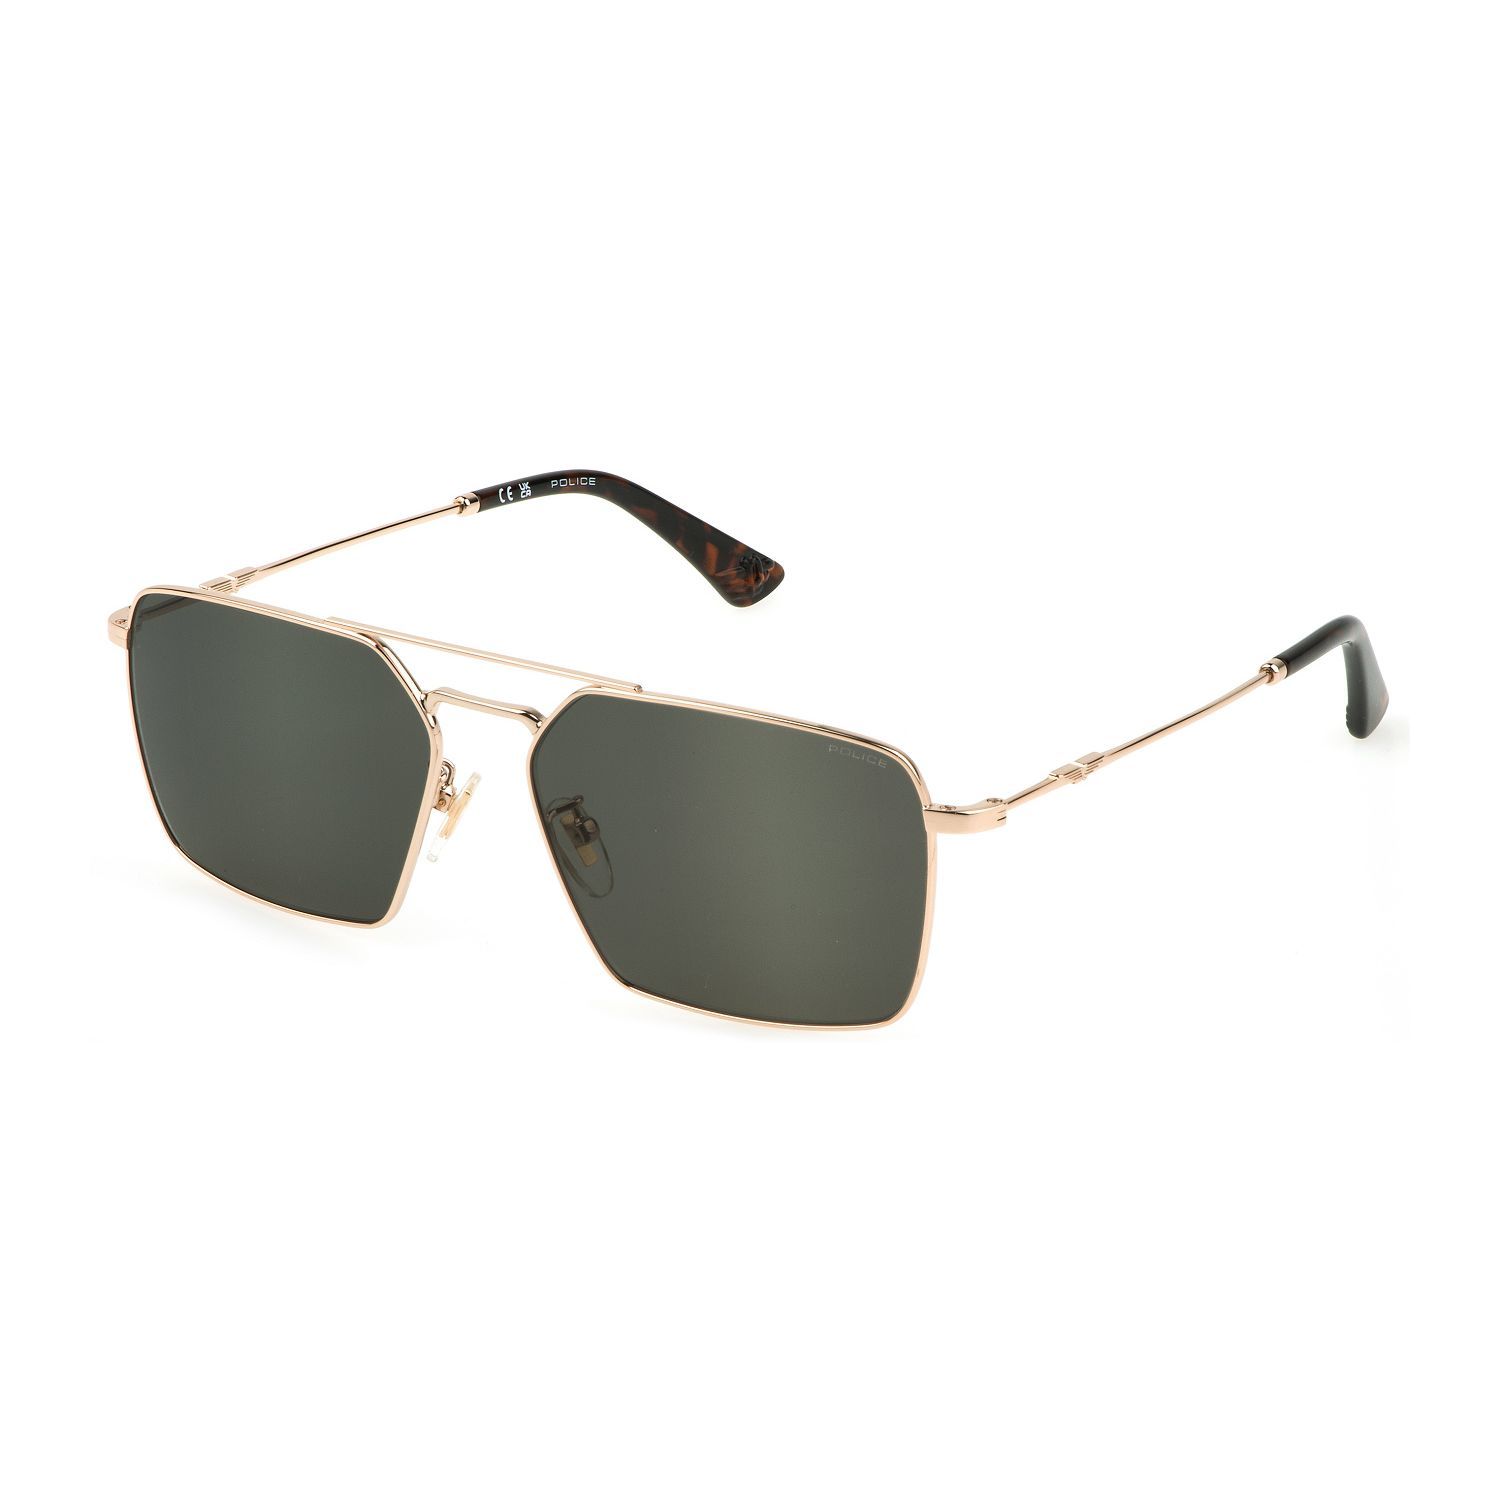 SPLL07M Square Sunglasses 300 - size 56